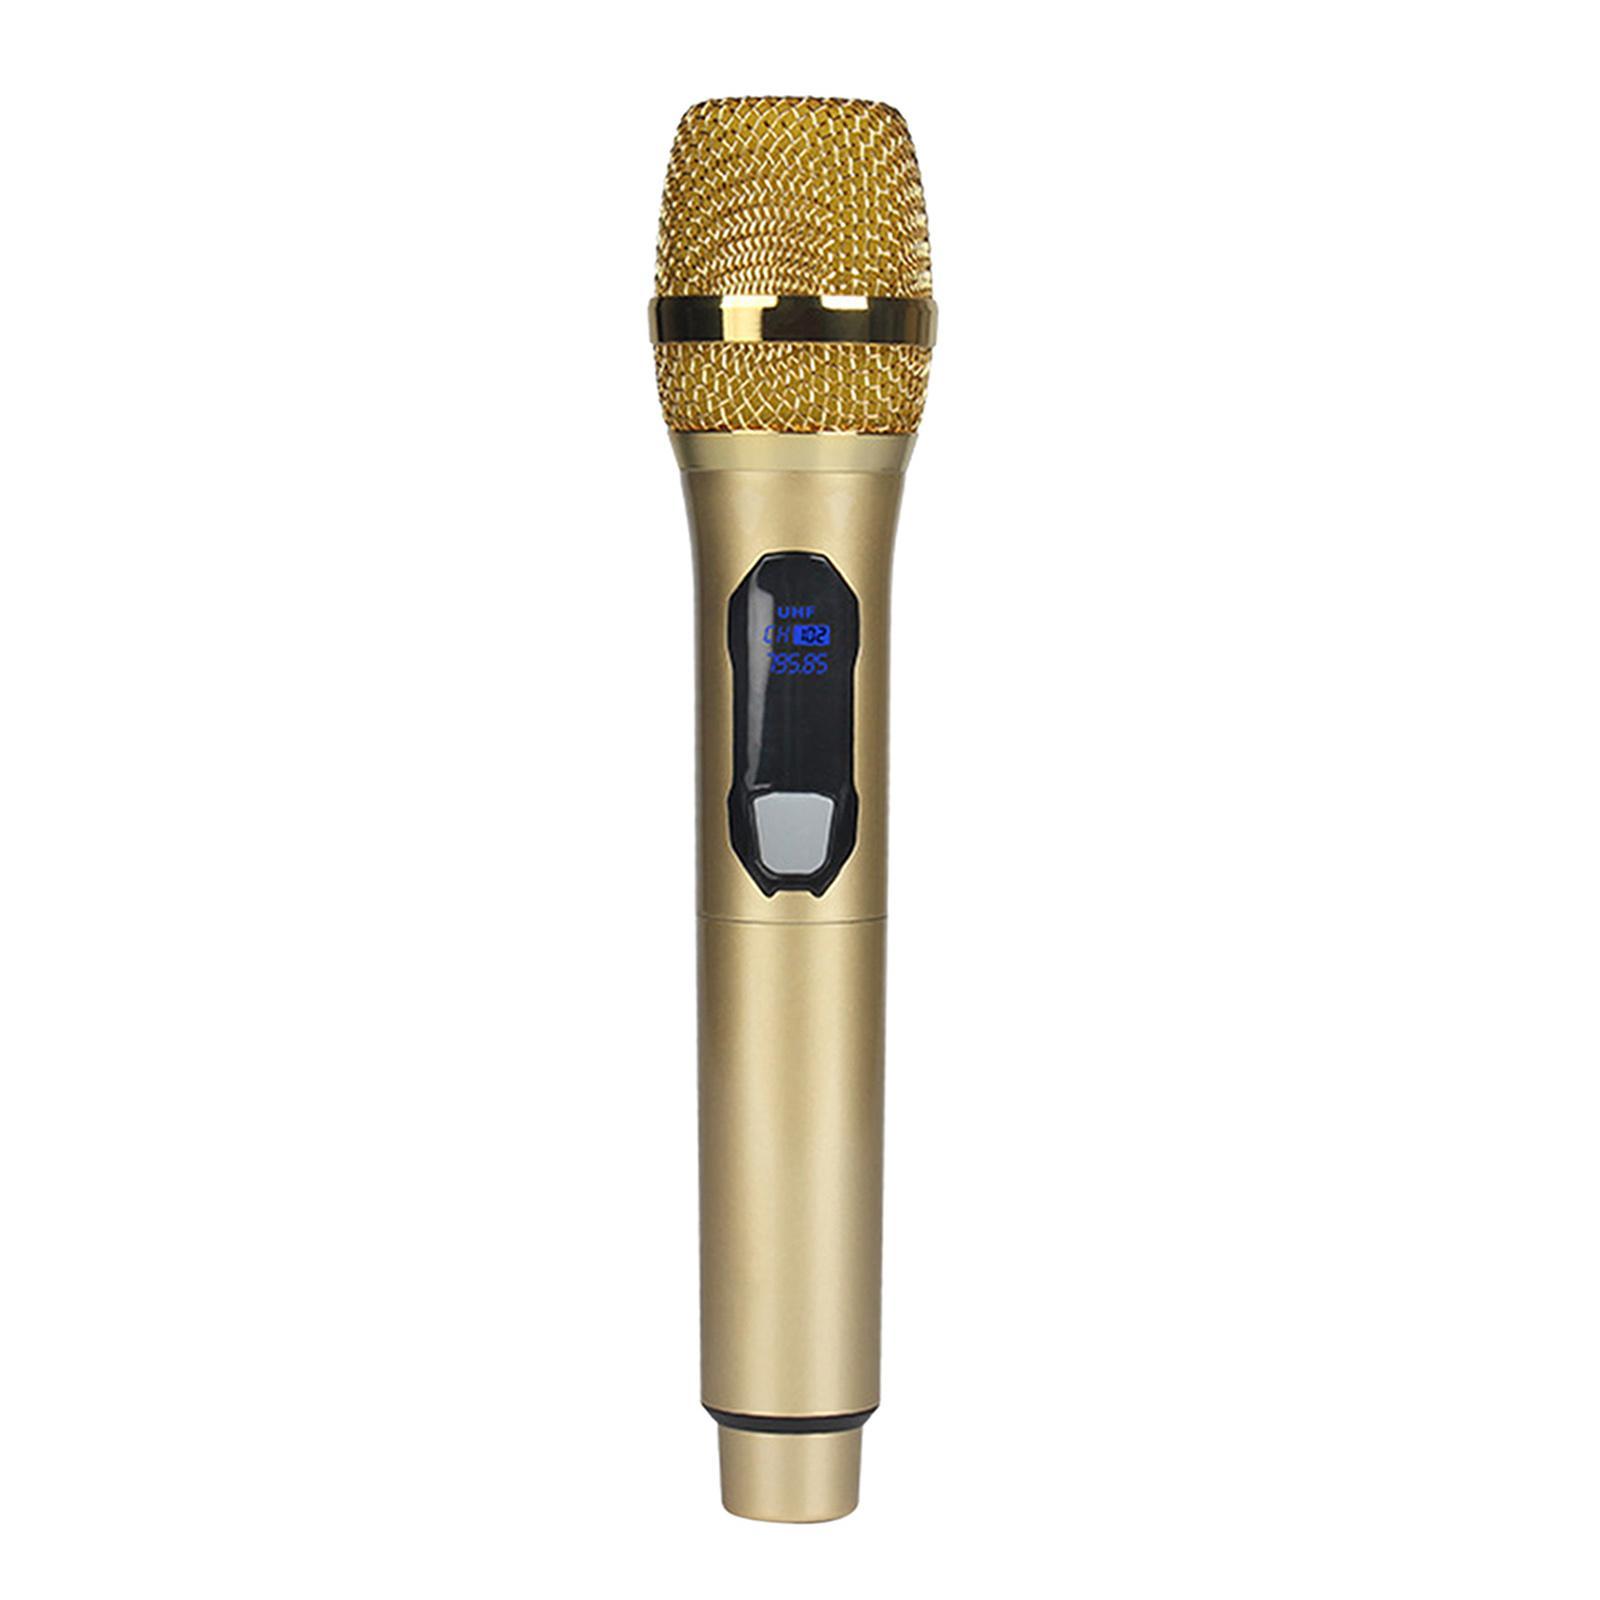 Wireless Karaoke Microphone Kids Adults Portable TV Noise Cancelling